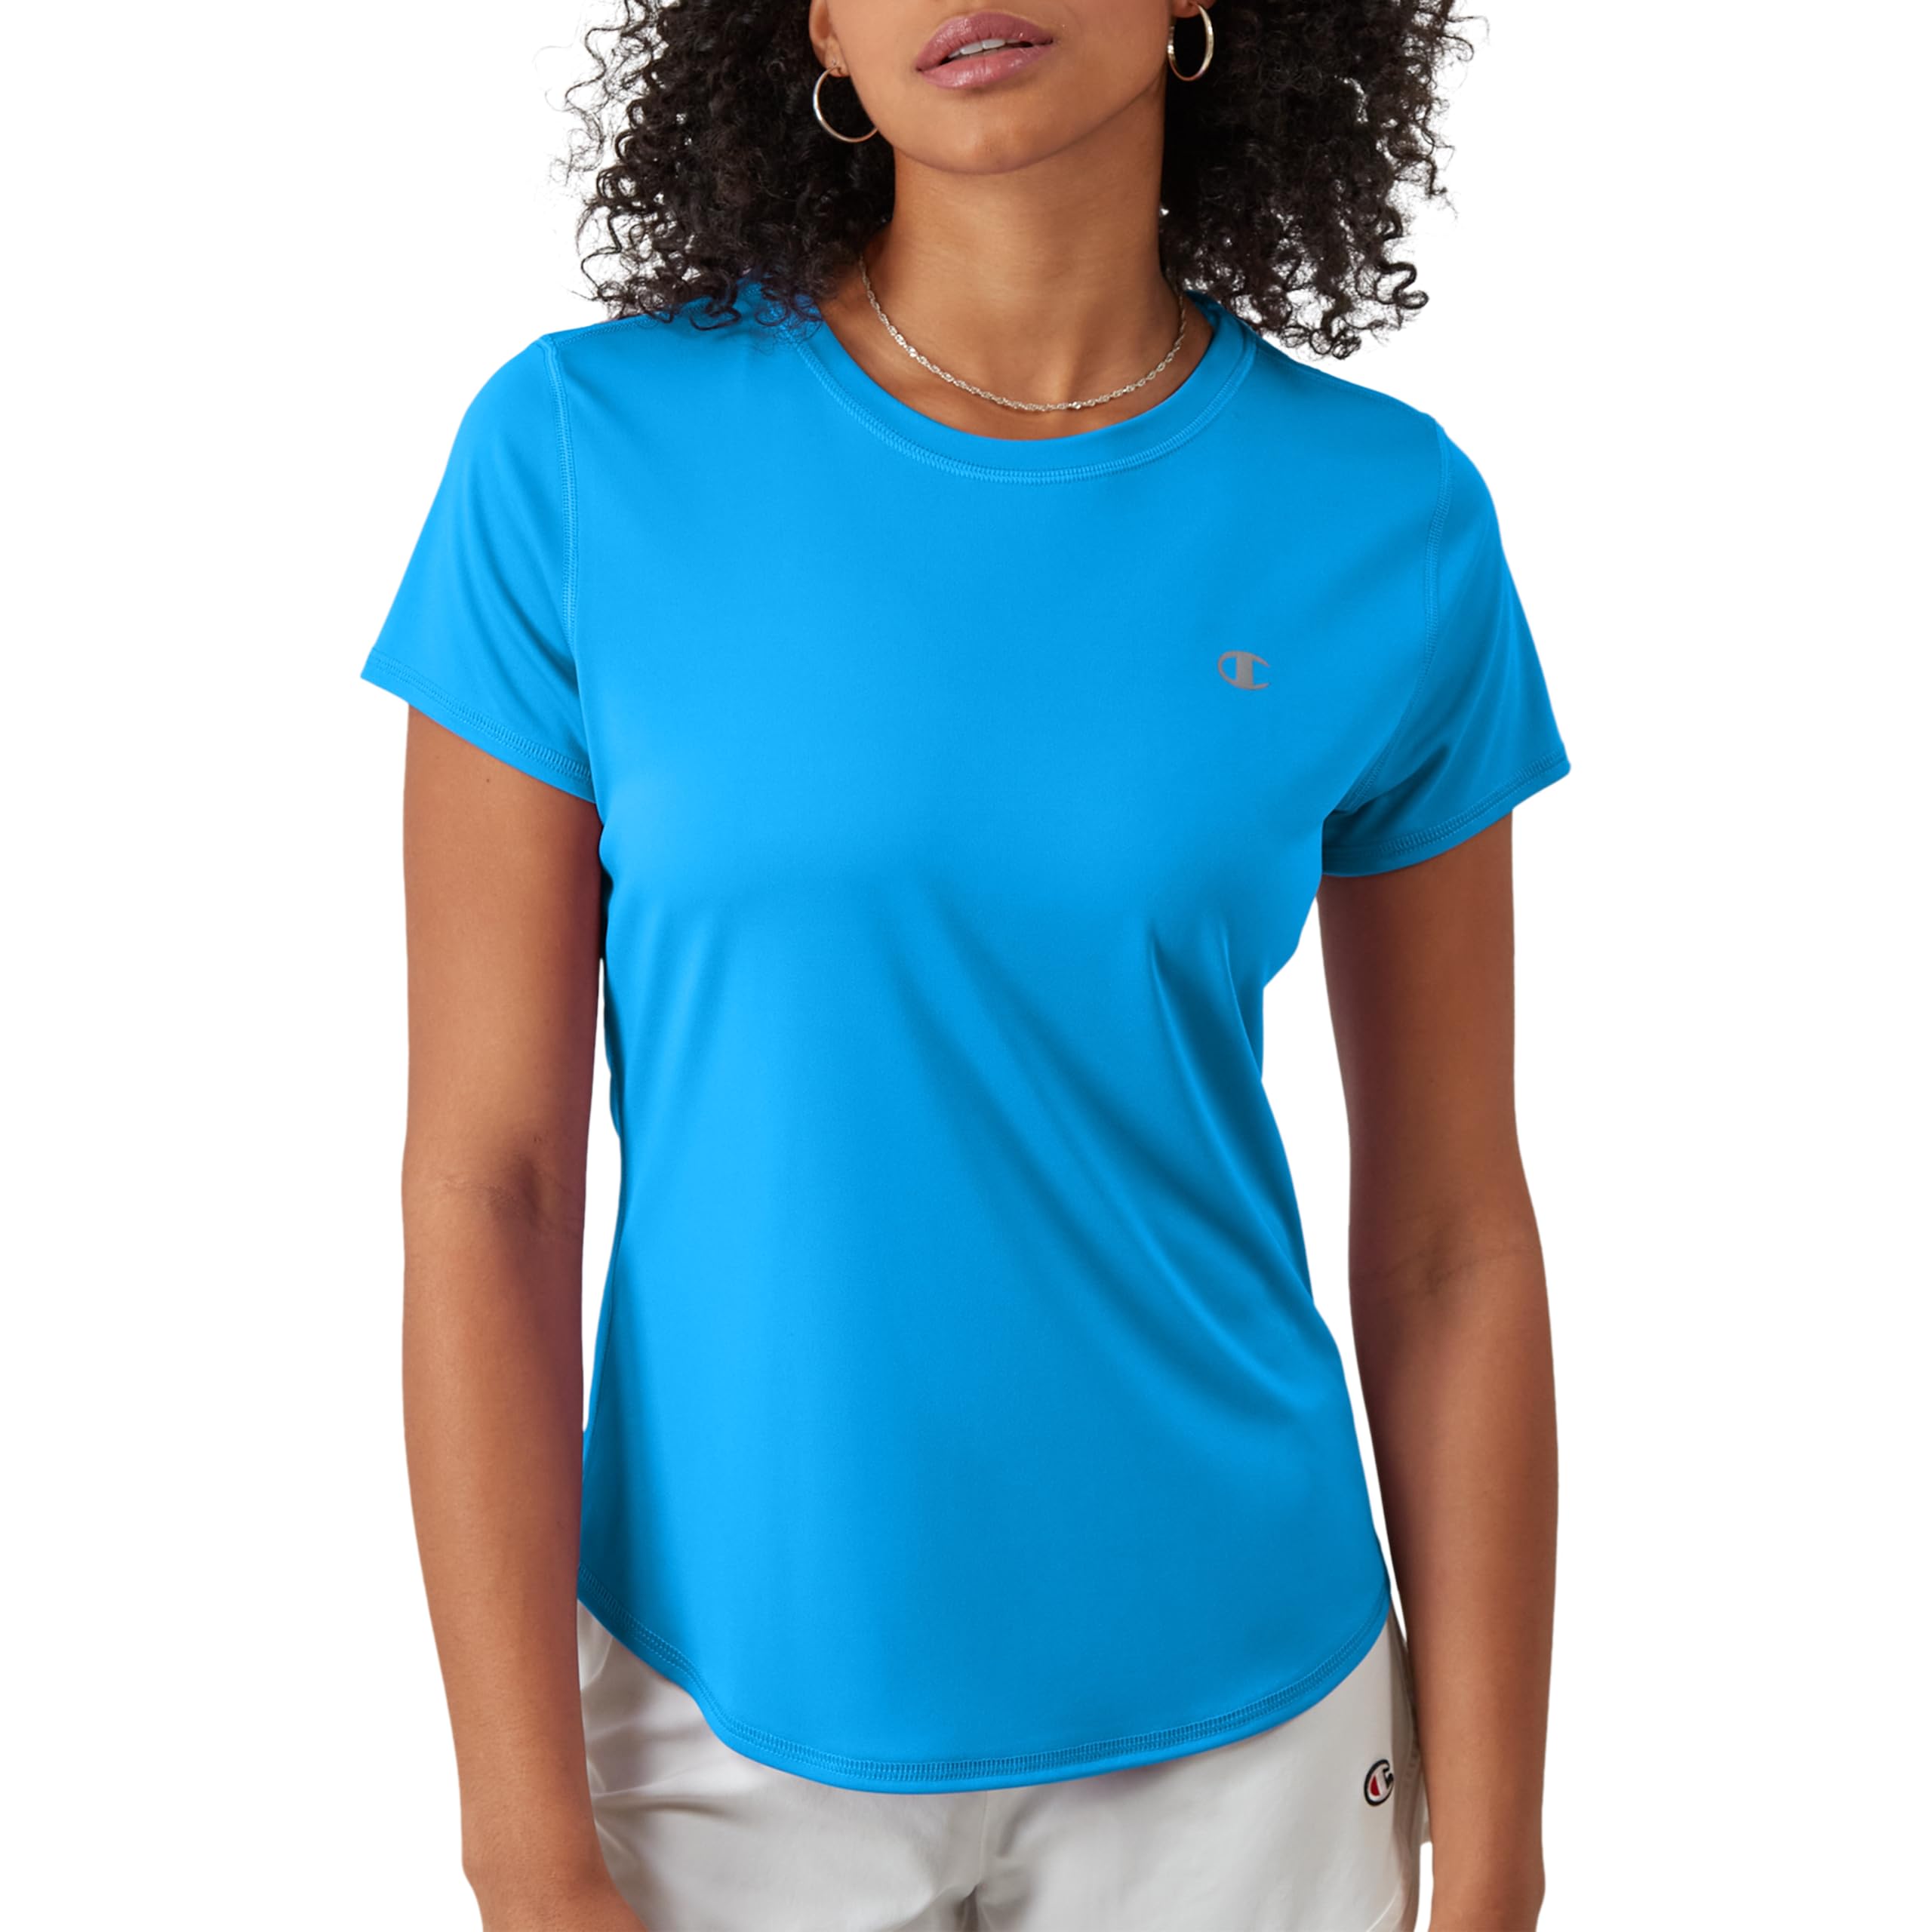 Champion Women's T-shirt, Classic Sport, Moisture-wicking T-shirt, Athletic Top for Women - $12